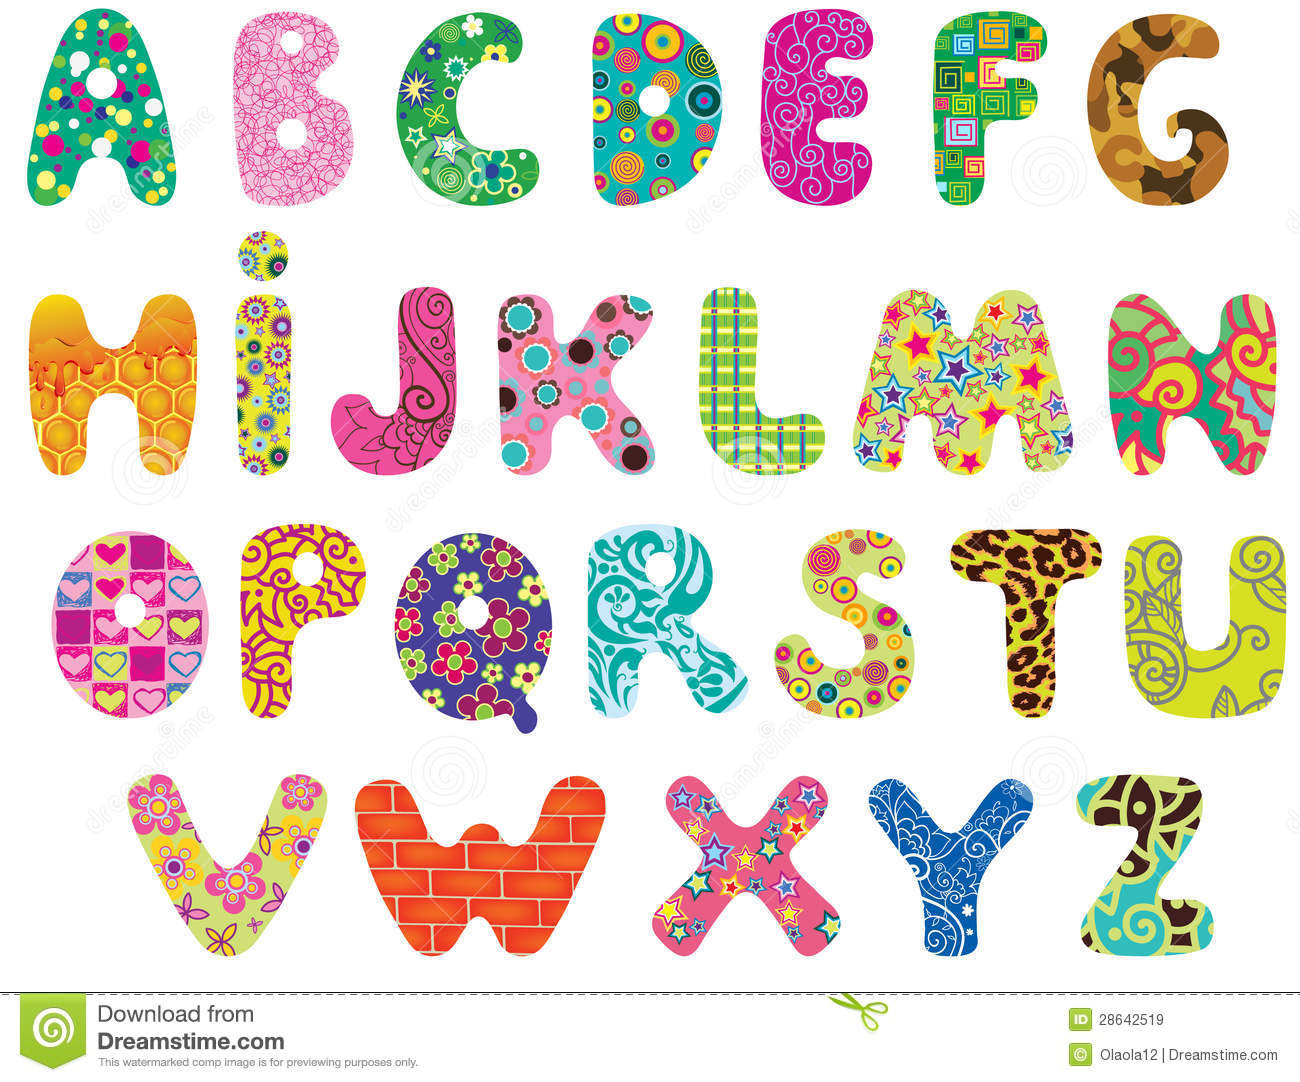 8 Best Images of Cute Alphabet Letters Printable - Cute Alphabet ...